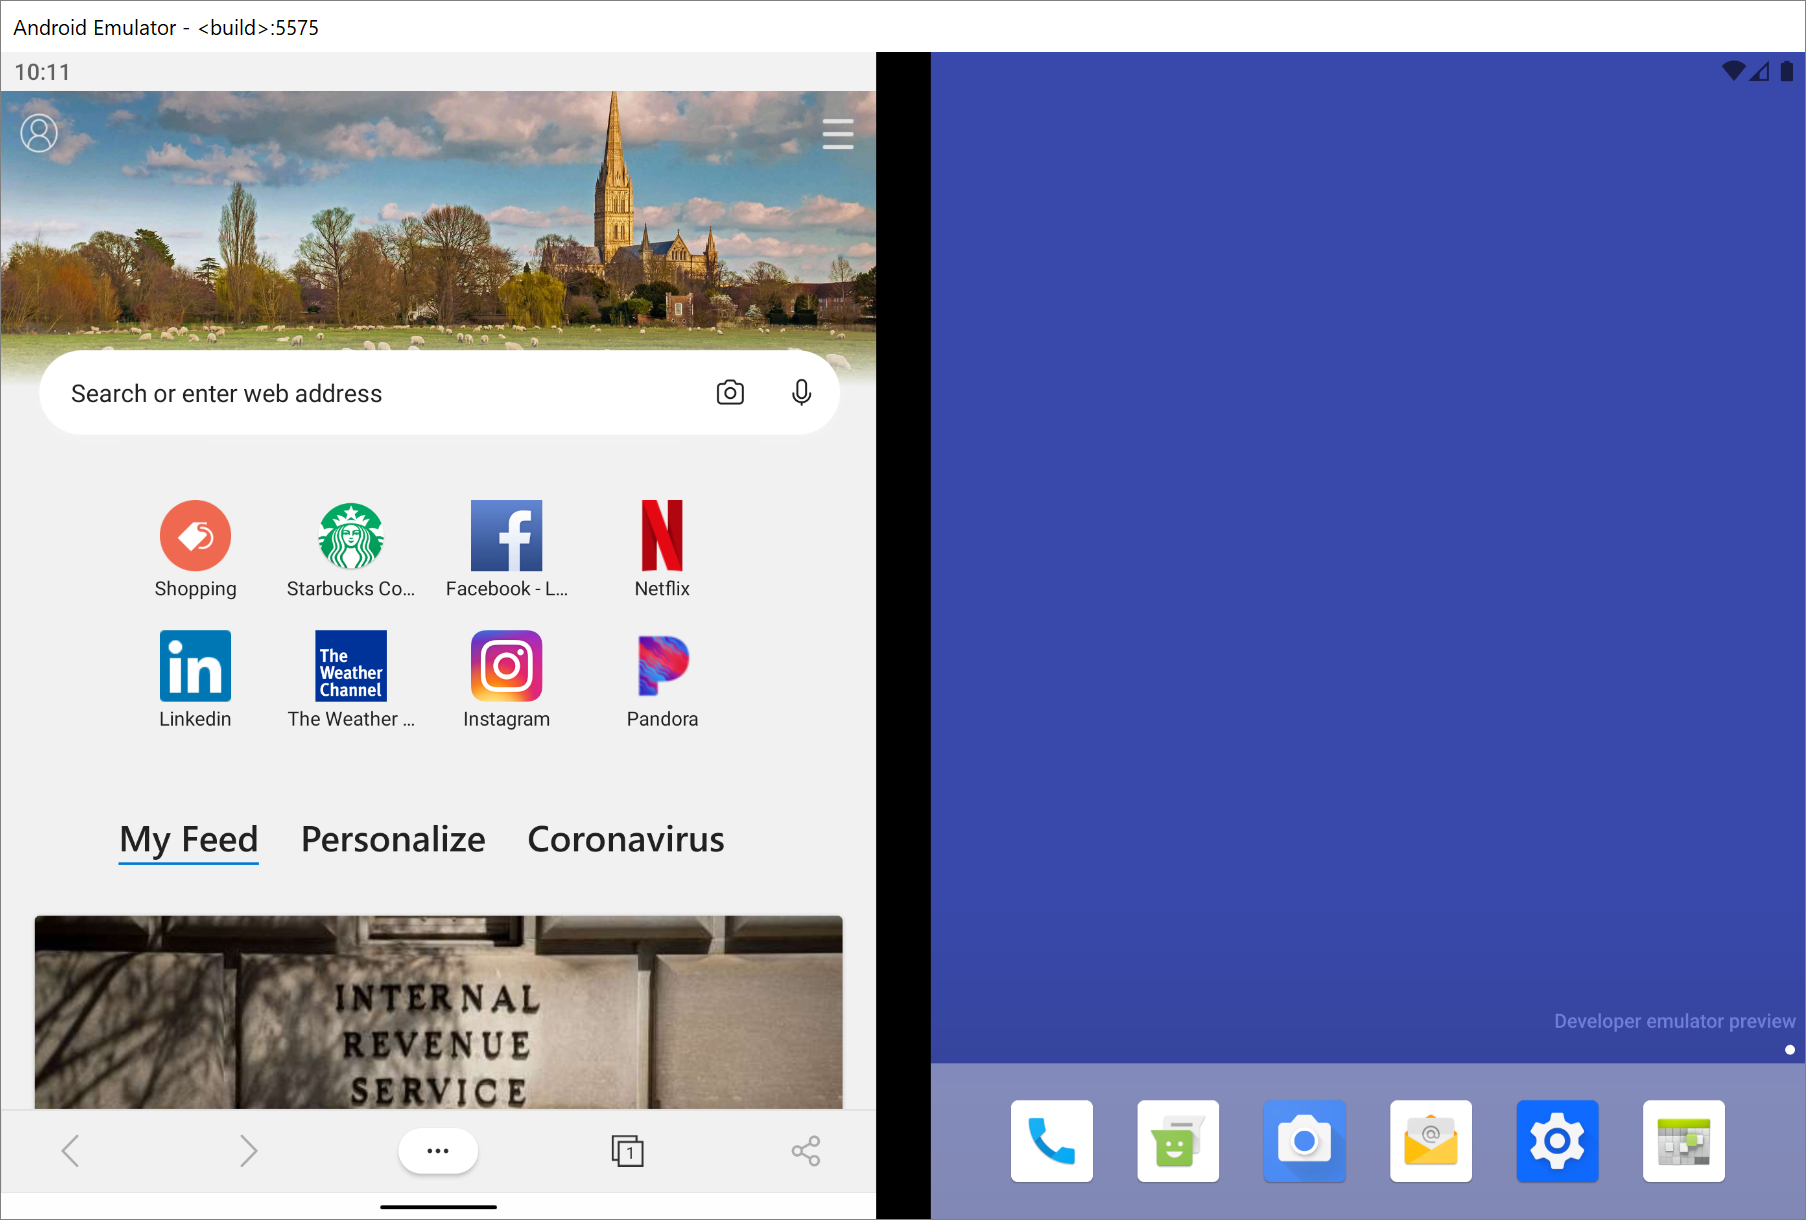 The Microsoft Edge app running on the Surface Duo emulator